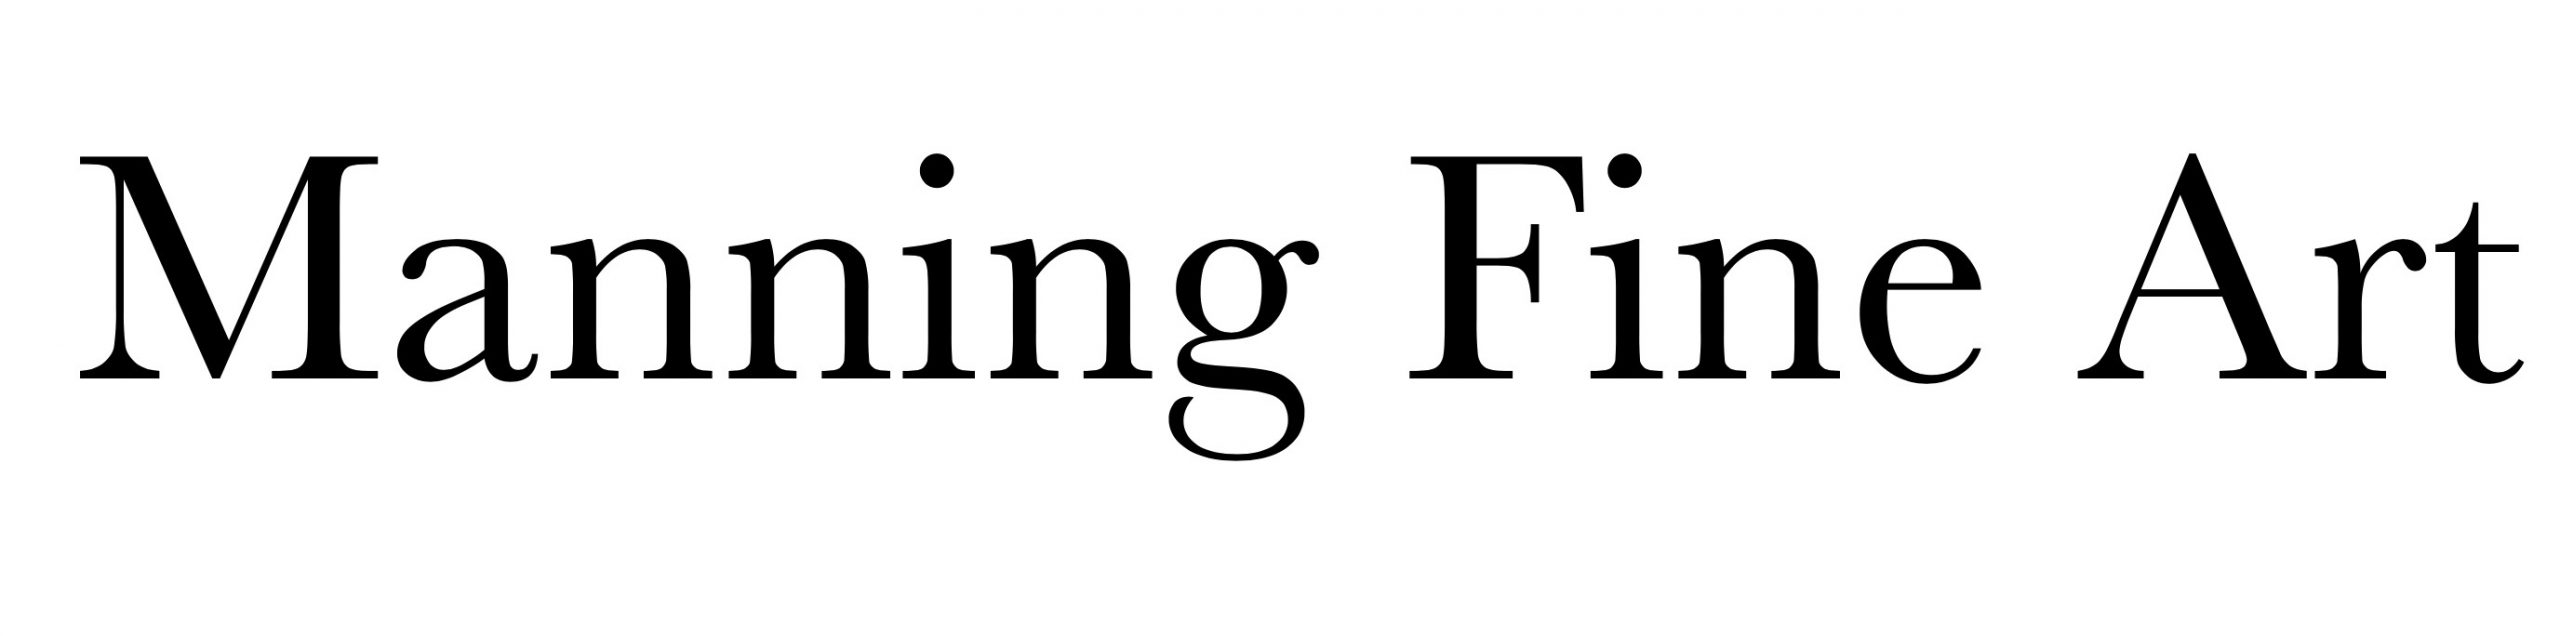 Manning Fine Art Logo